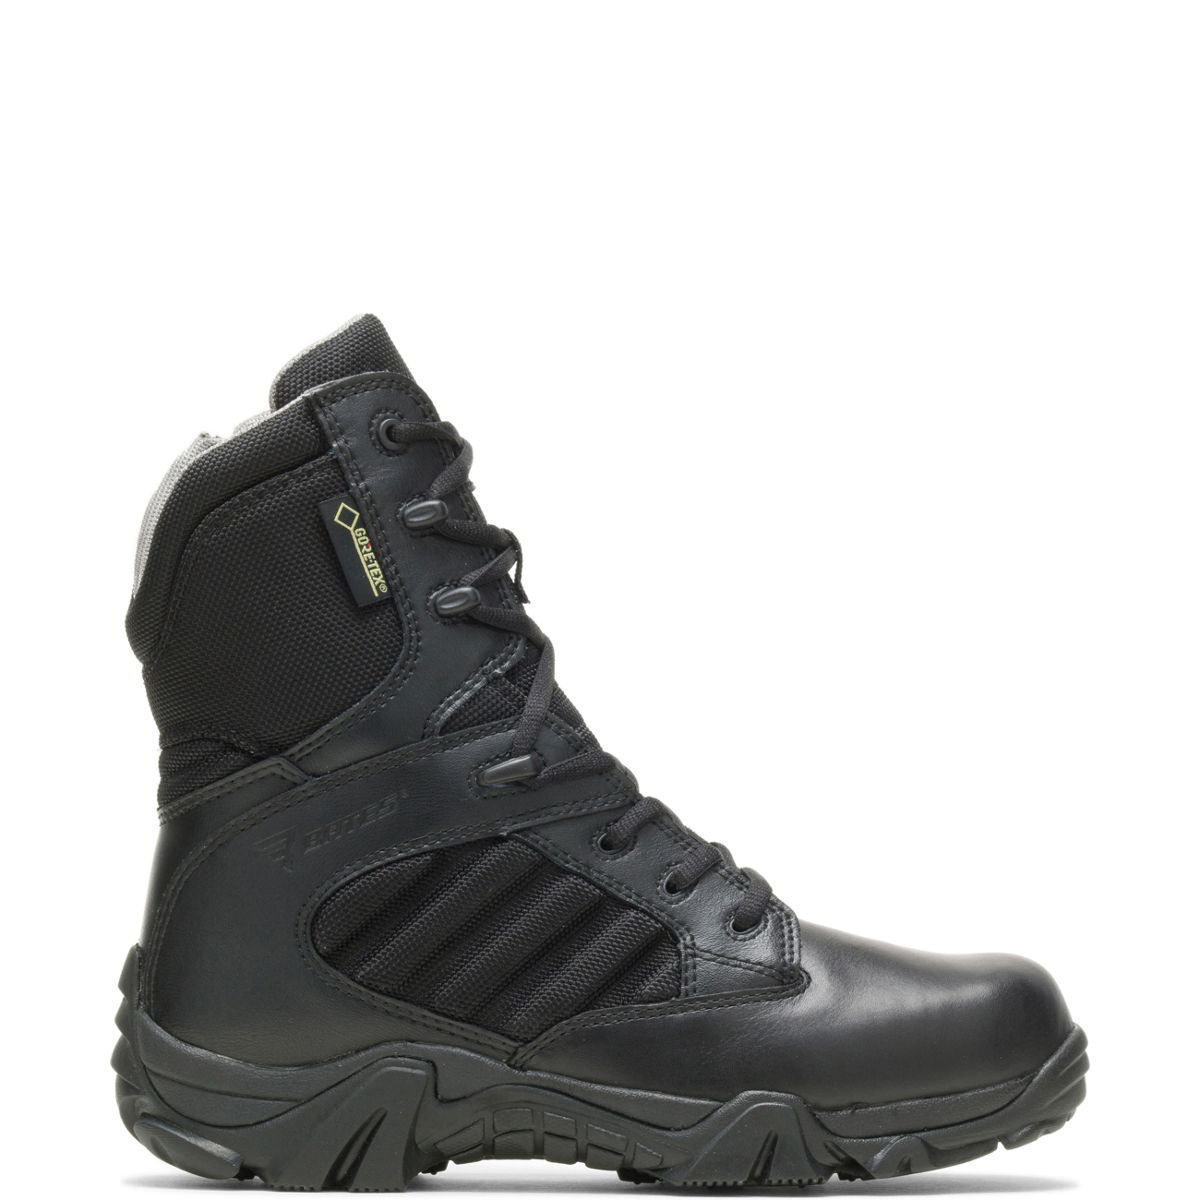 Bates Boots - Tactical, Military & Security Footwear | Bates